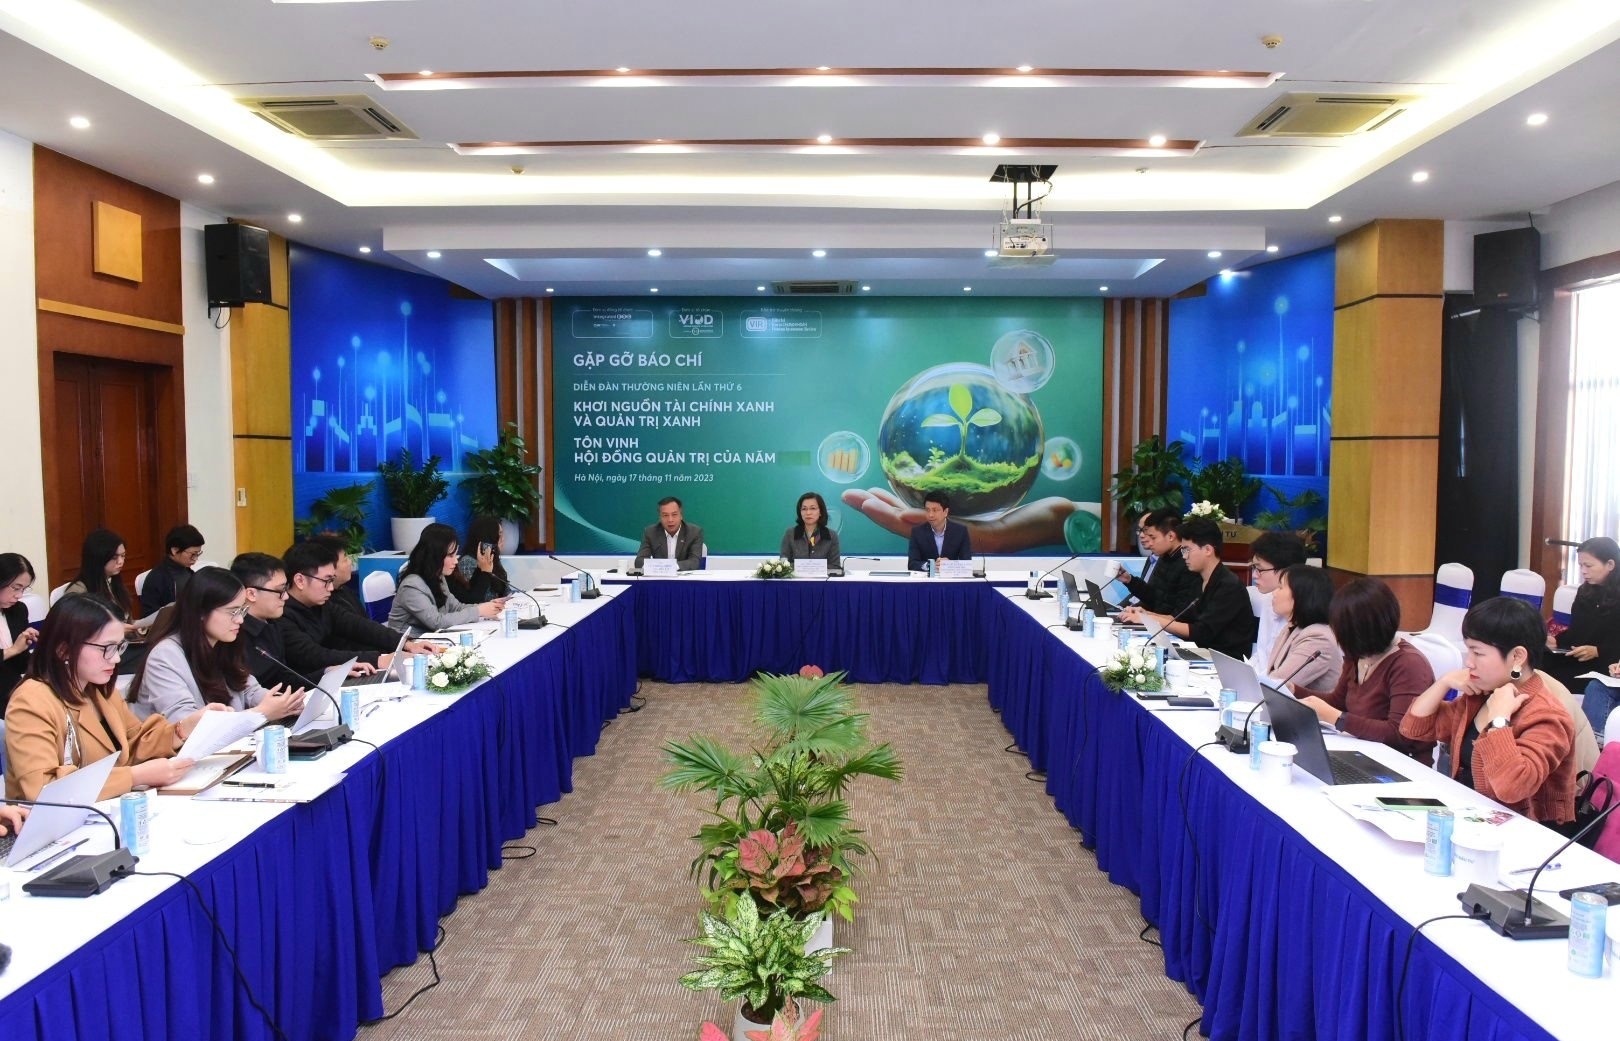 Hanoi to host forum on corporate governance